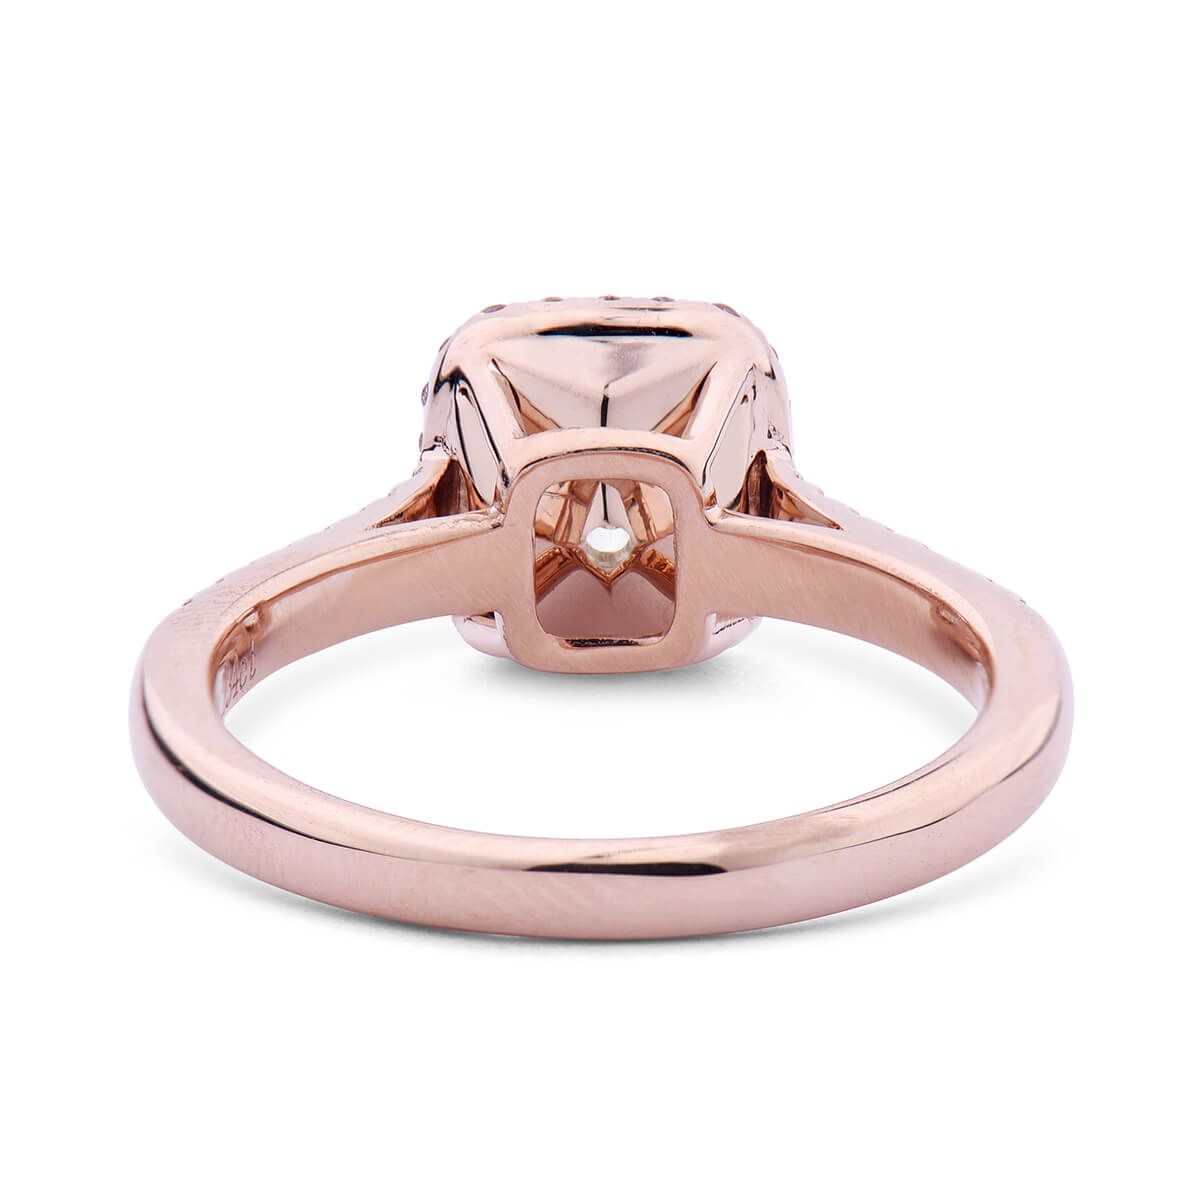 Fancy Light Brownish Greenish Yellow Diamond Ring, 1.50 Ct. (1.74 Ct. TW), Cushion shape, GIA Certified, 1149674700